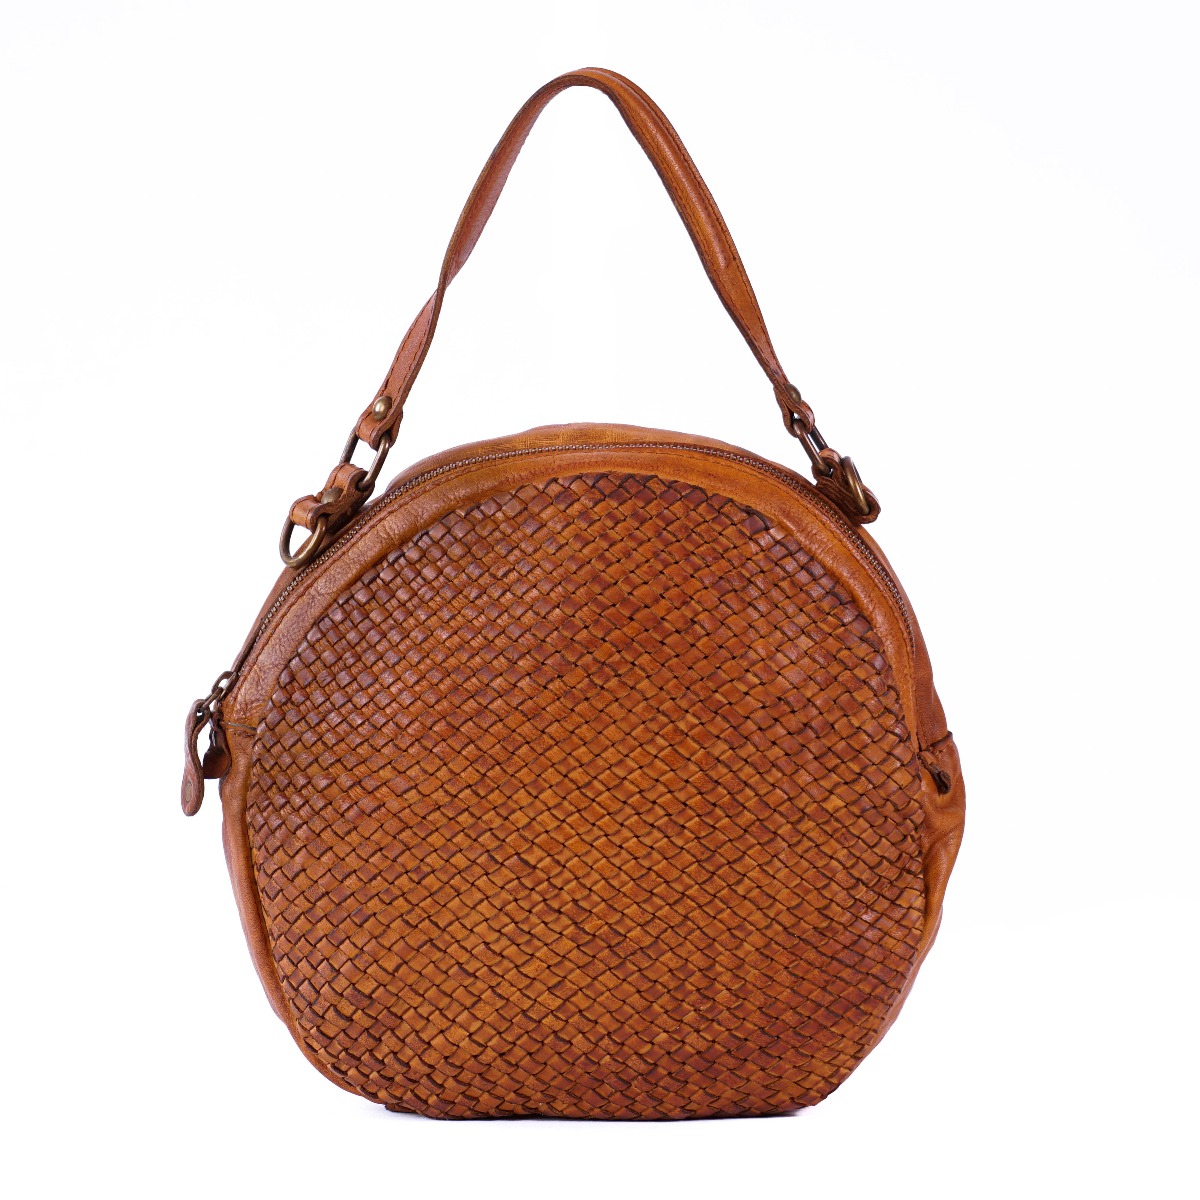 Round woven leather women handbag